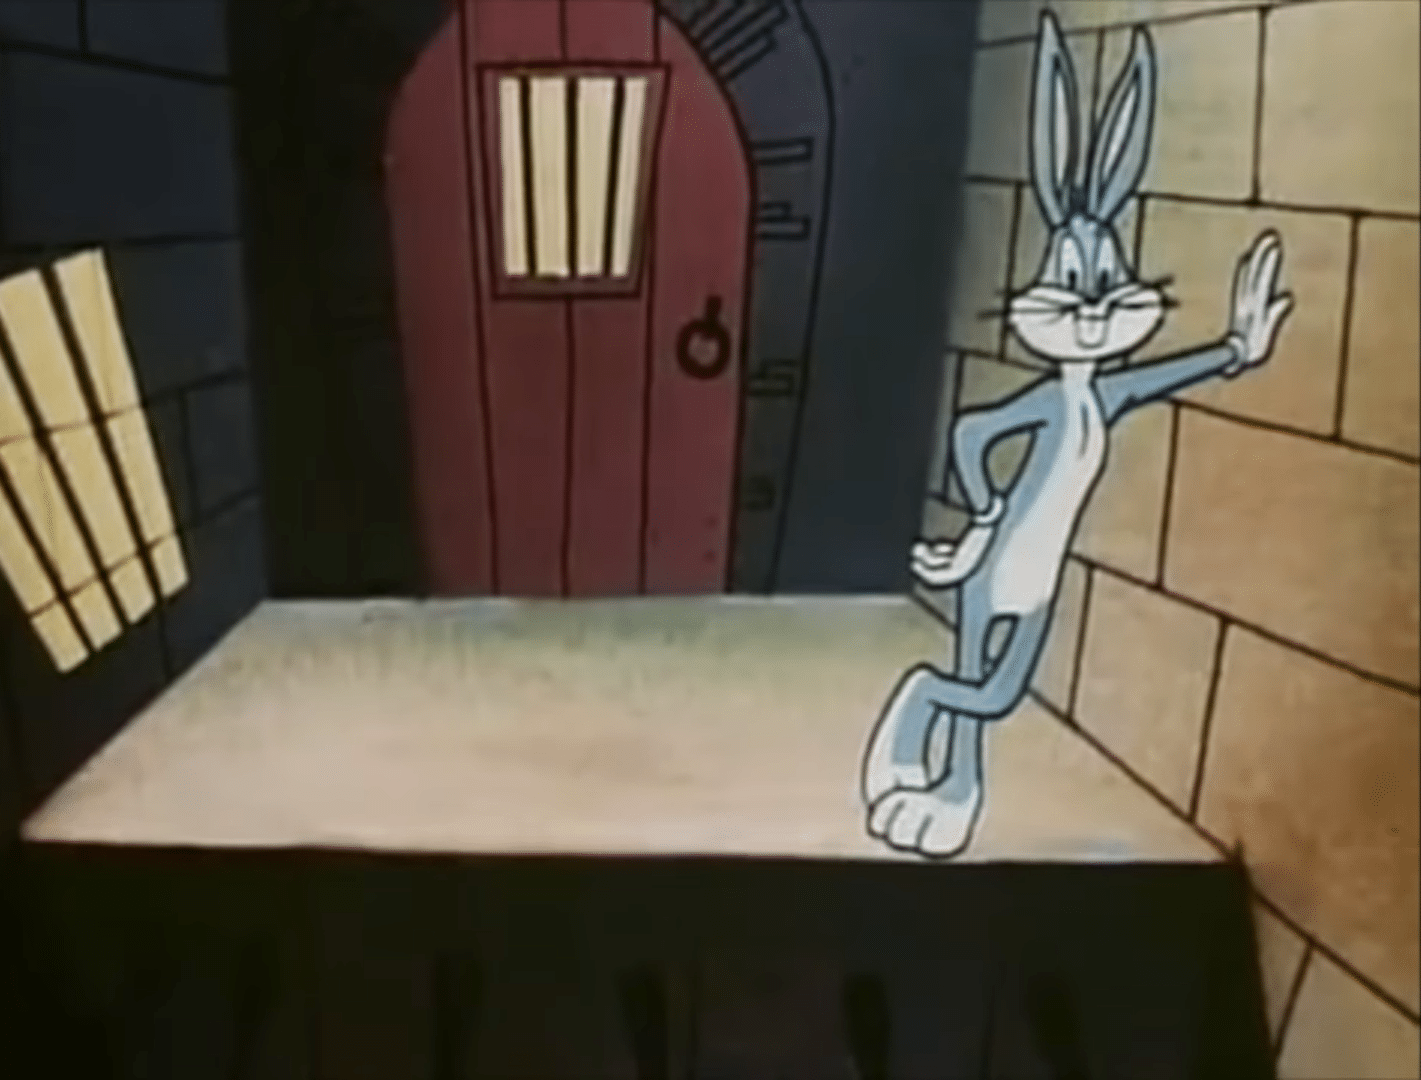 Looney Bugs Bunny Movie (1981)